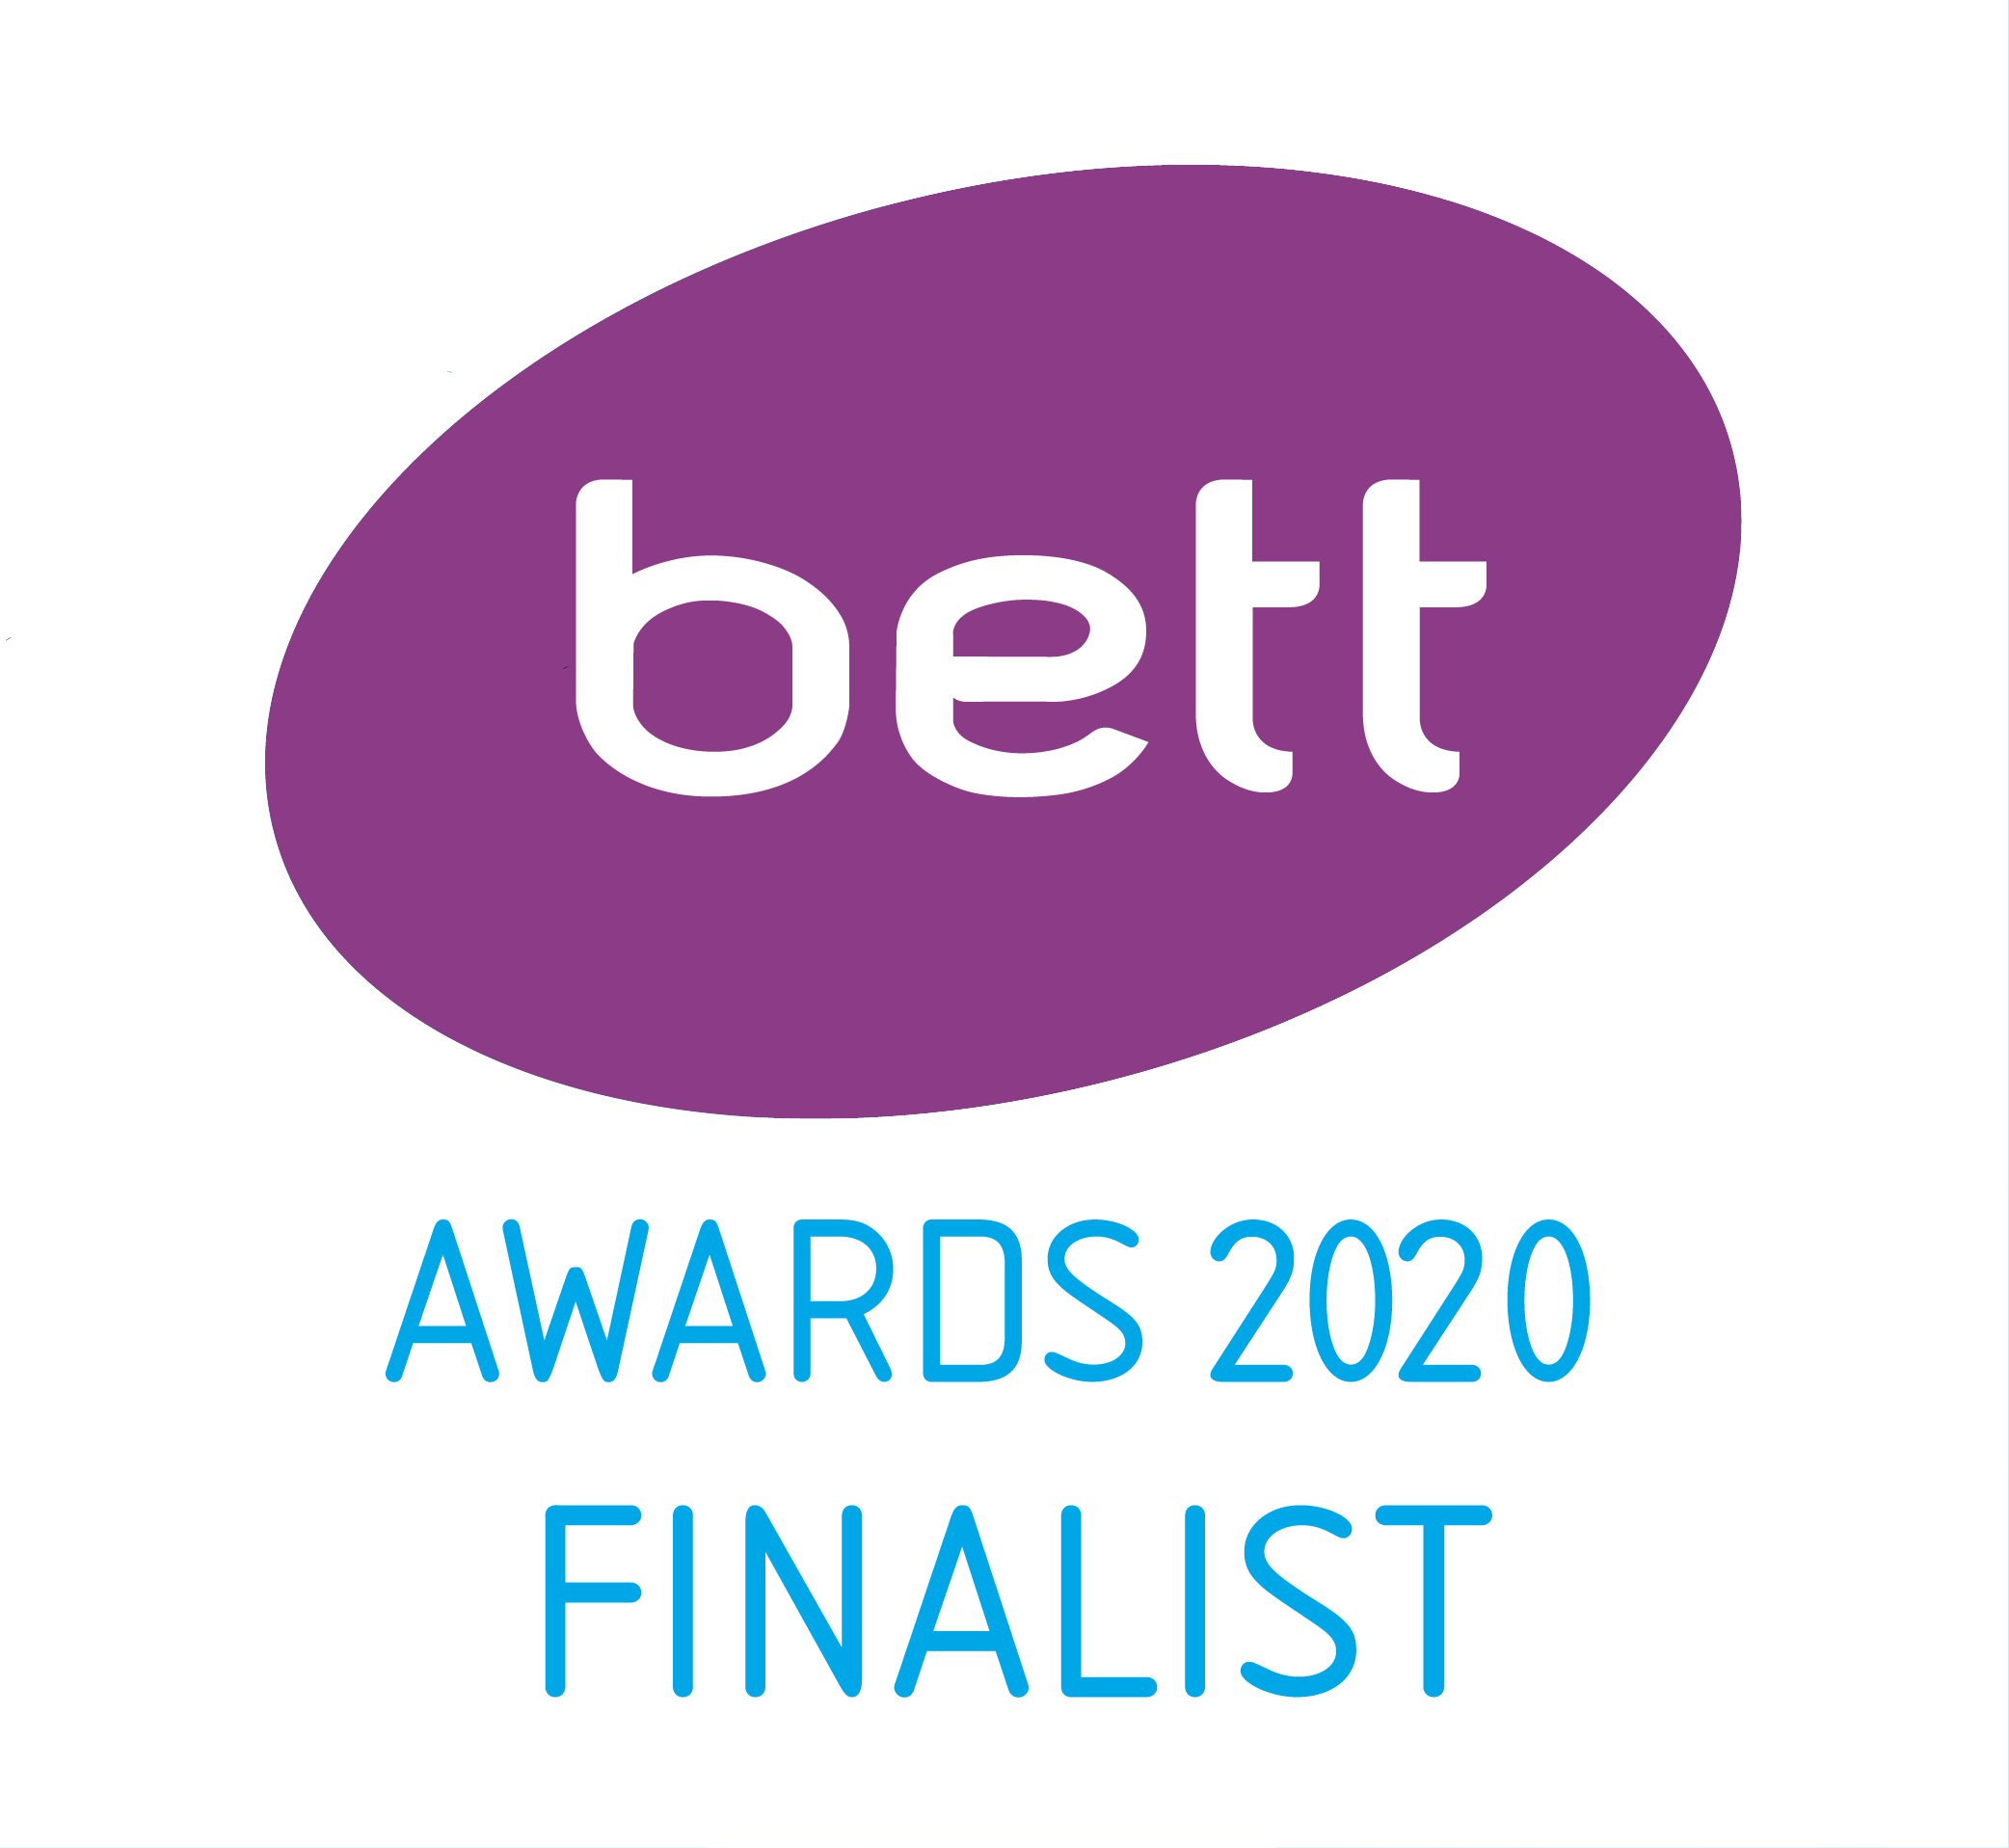 bett-award-2020-finalist